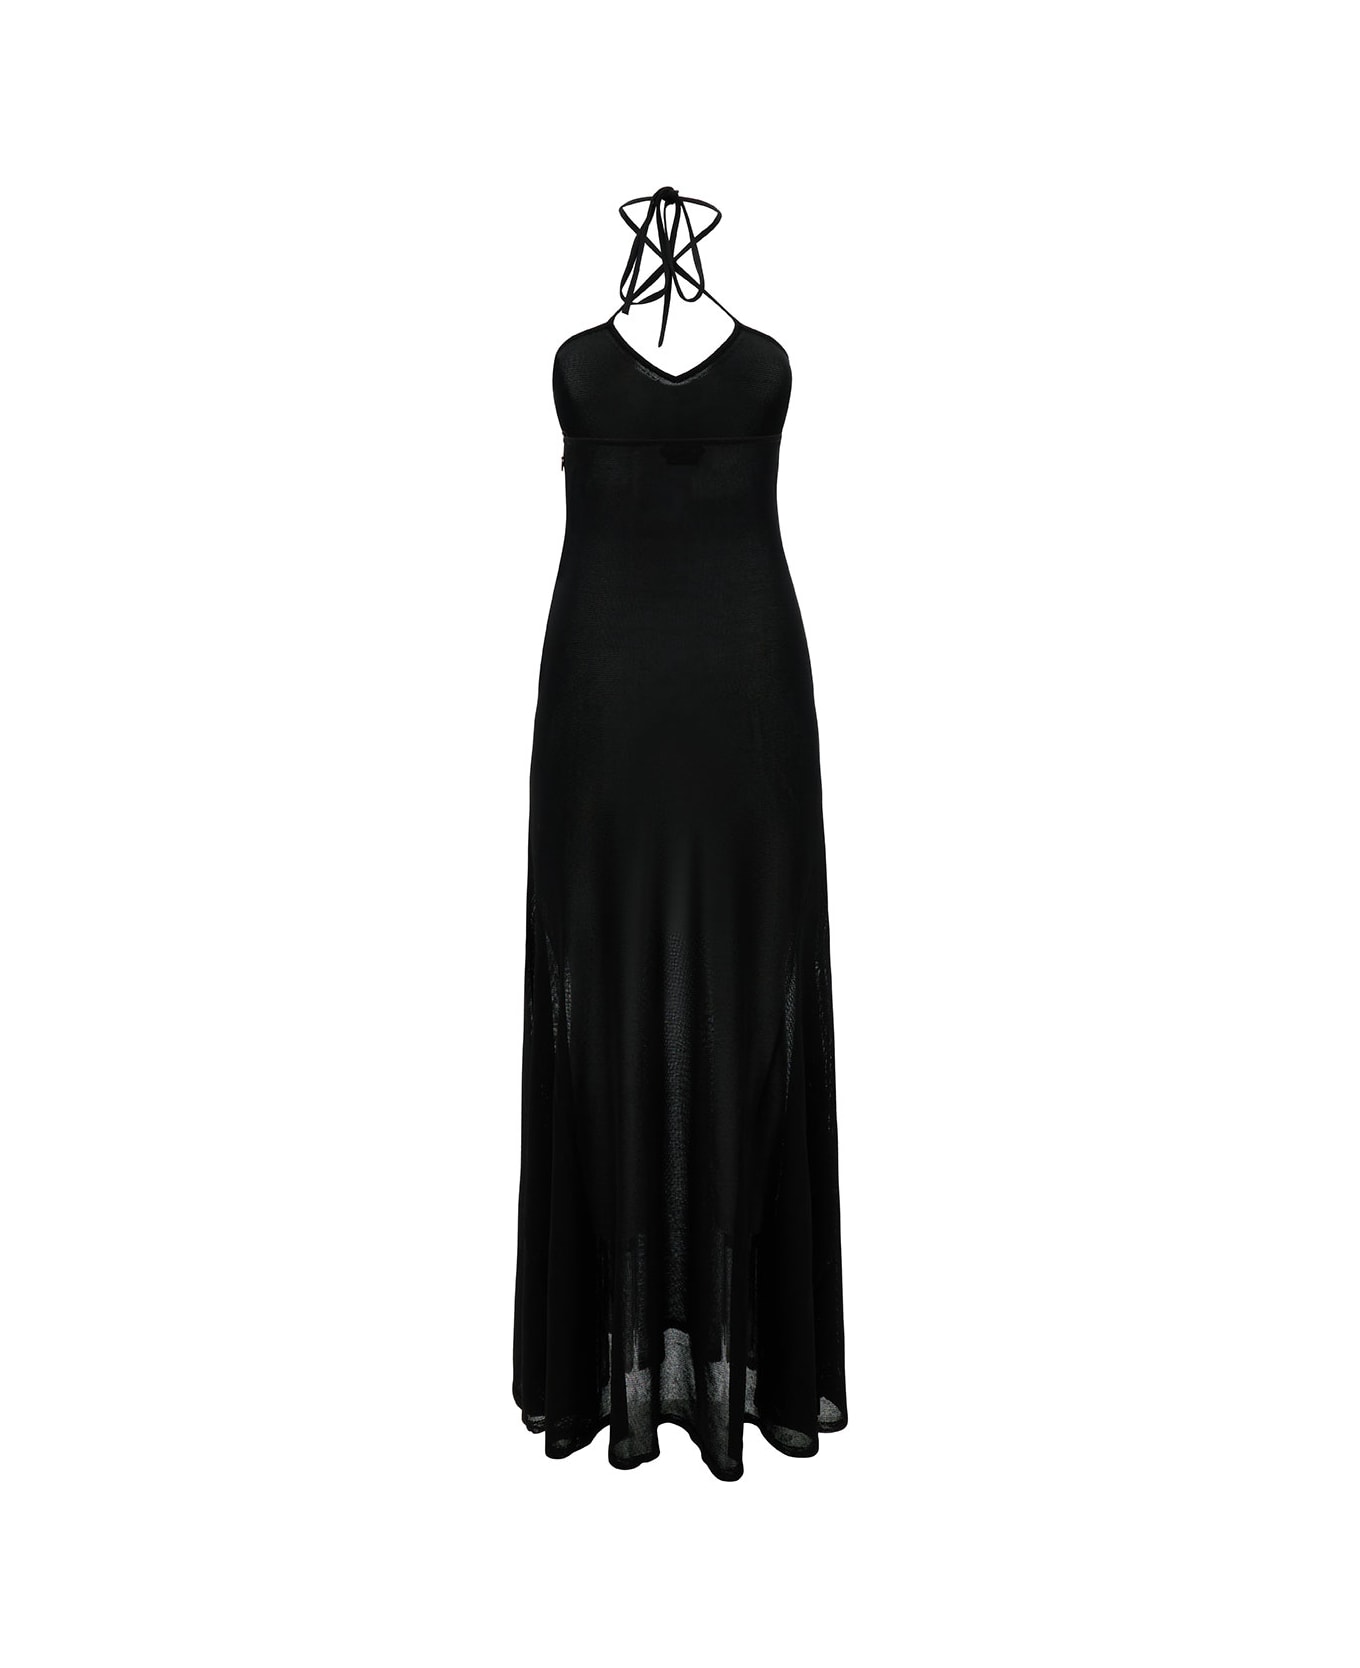 Tom Ford Maxi Black Dress With Halterneck In Fine Knit Woman - Black